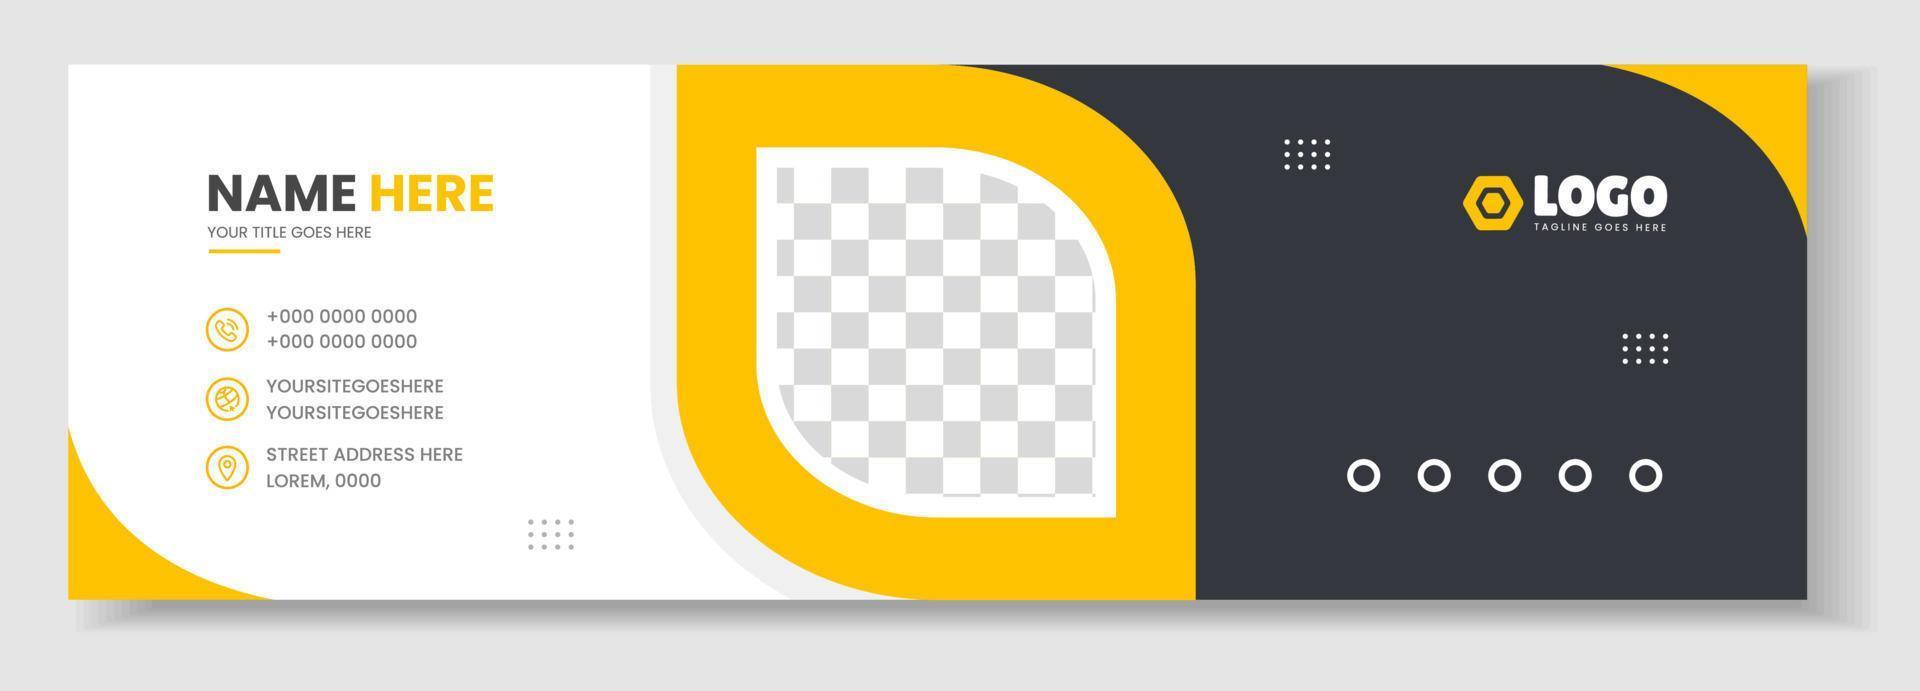 Corporate Modern Email Signature Design template. Email signature template design with yellow color. business e signature vector design.